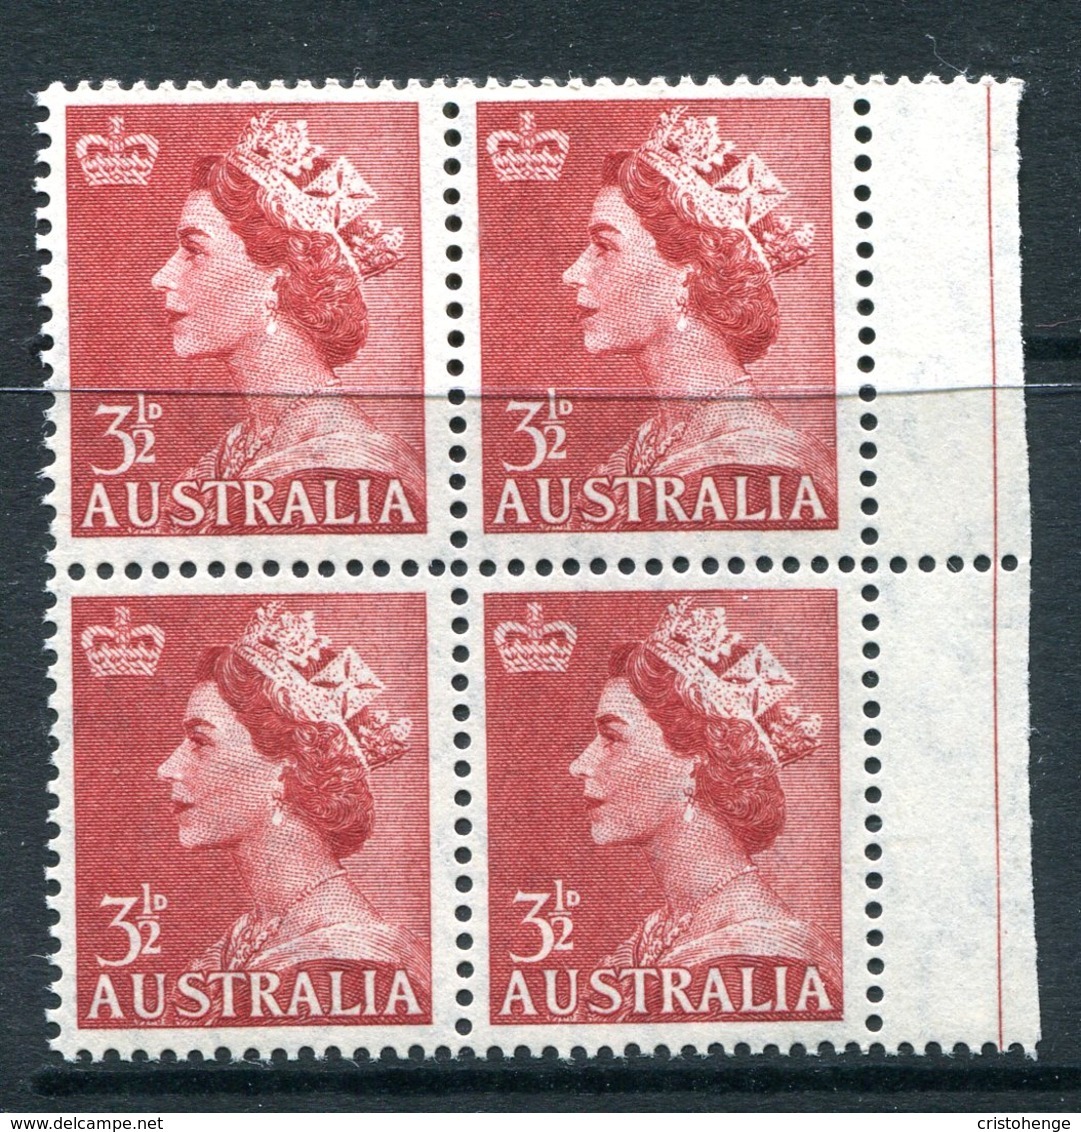 Australia 1953-57 QEII Definitives - 3½d Brown-red - Wmk. - Block Of 4 MNH (SG 263) - Mint Stamps